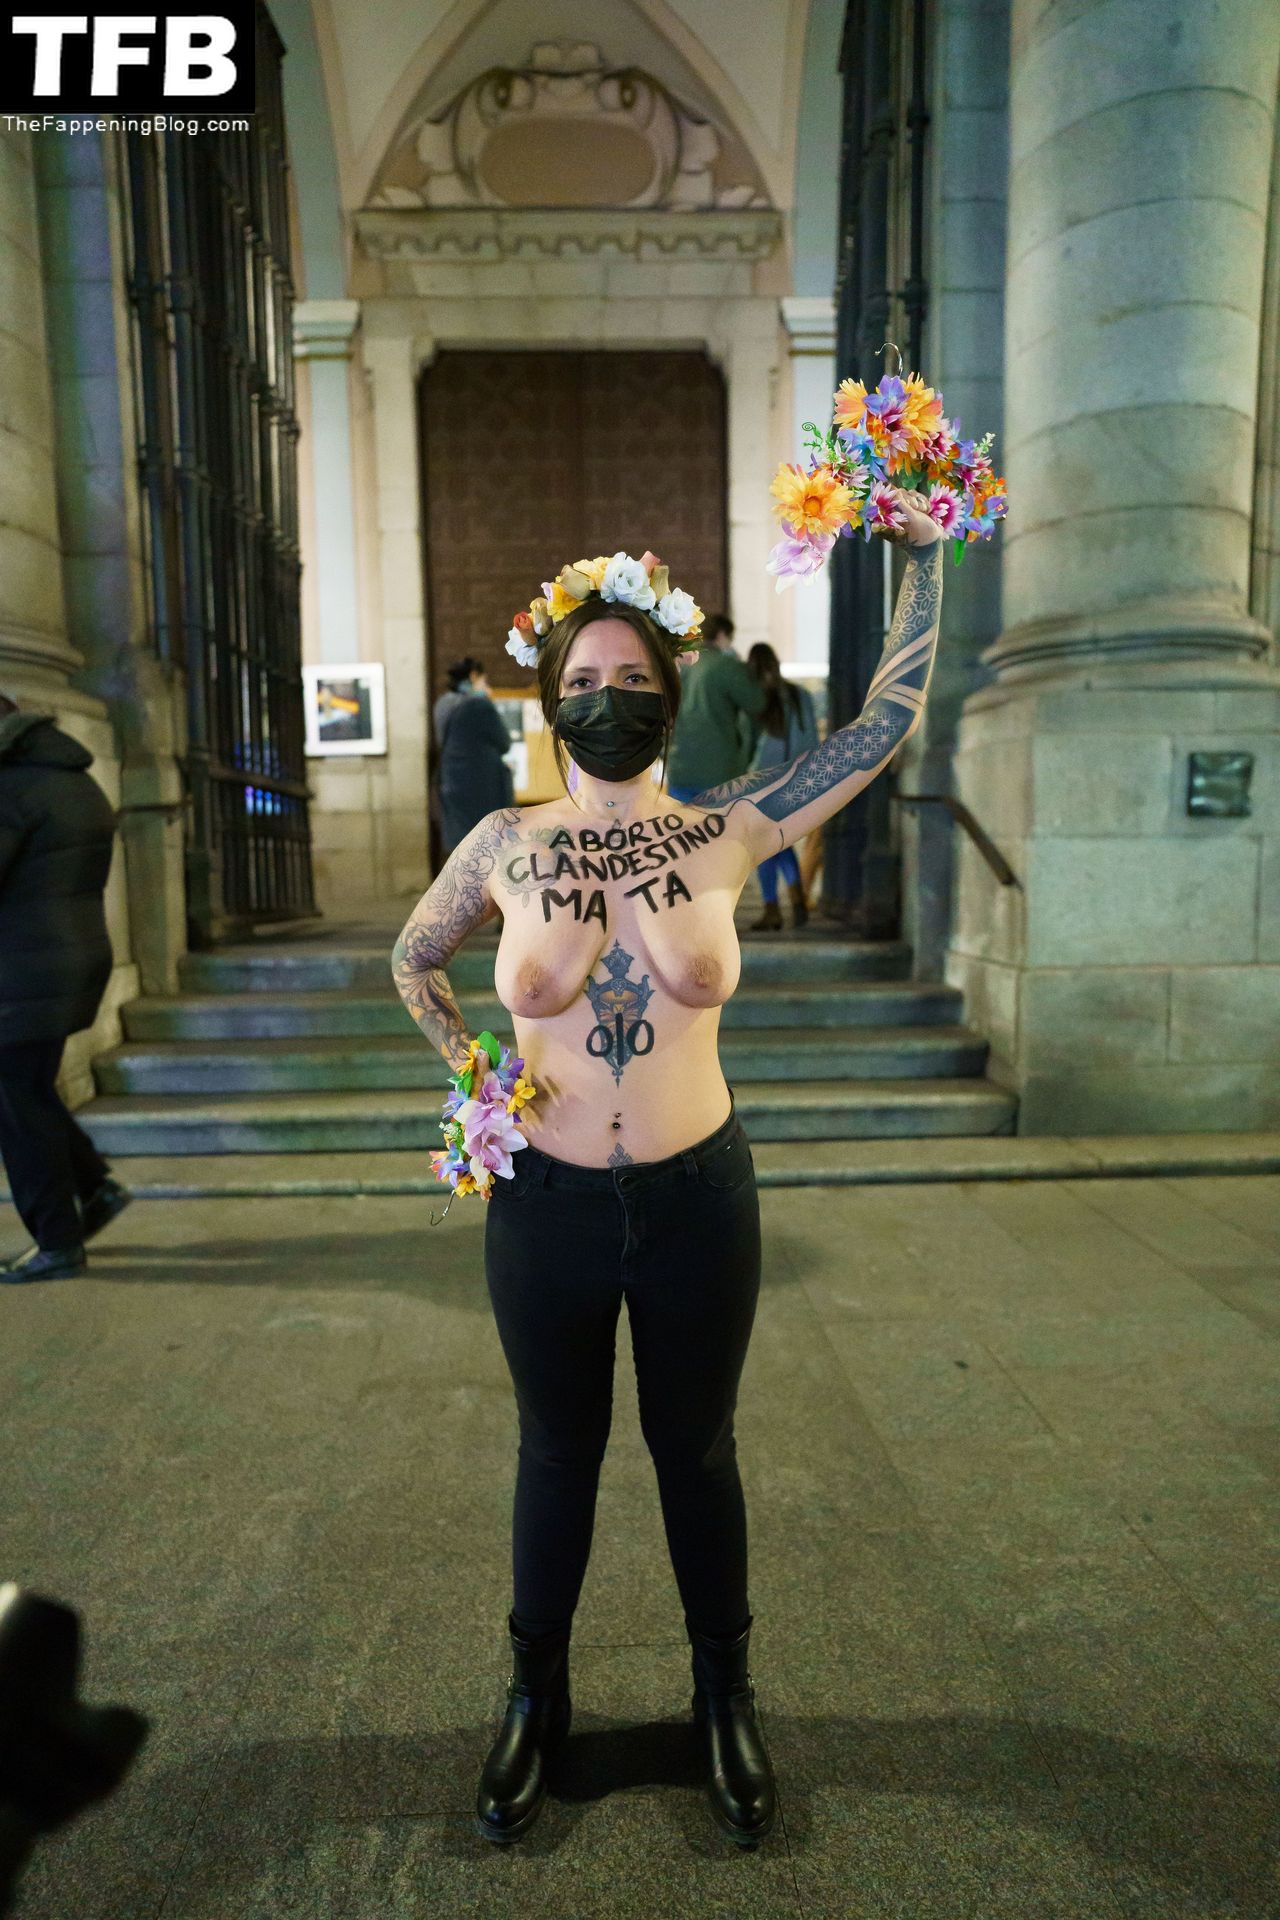 Femen-Nude-Protest-The-Fappening-Blog-8.jpg